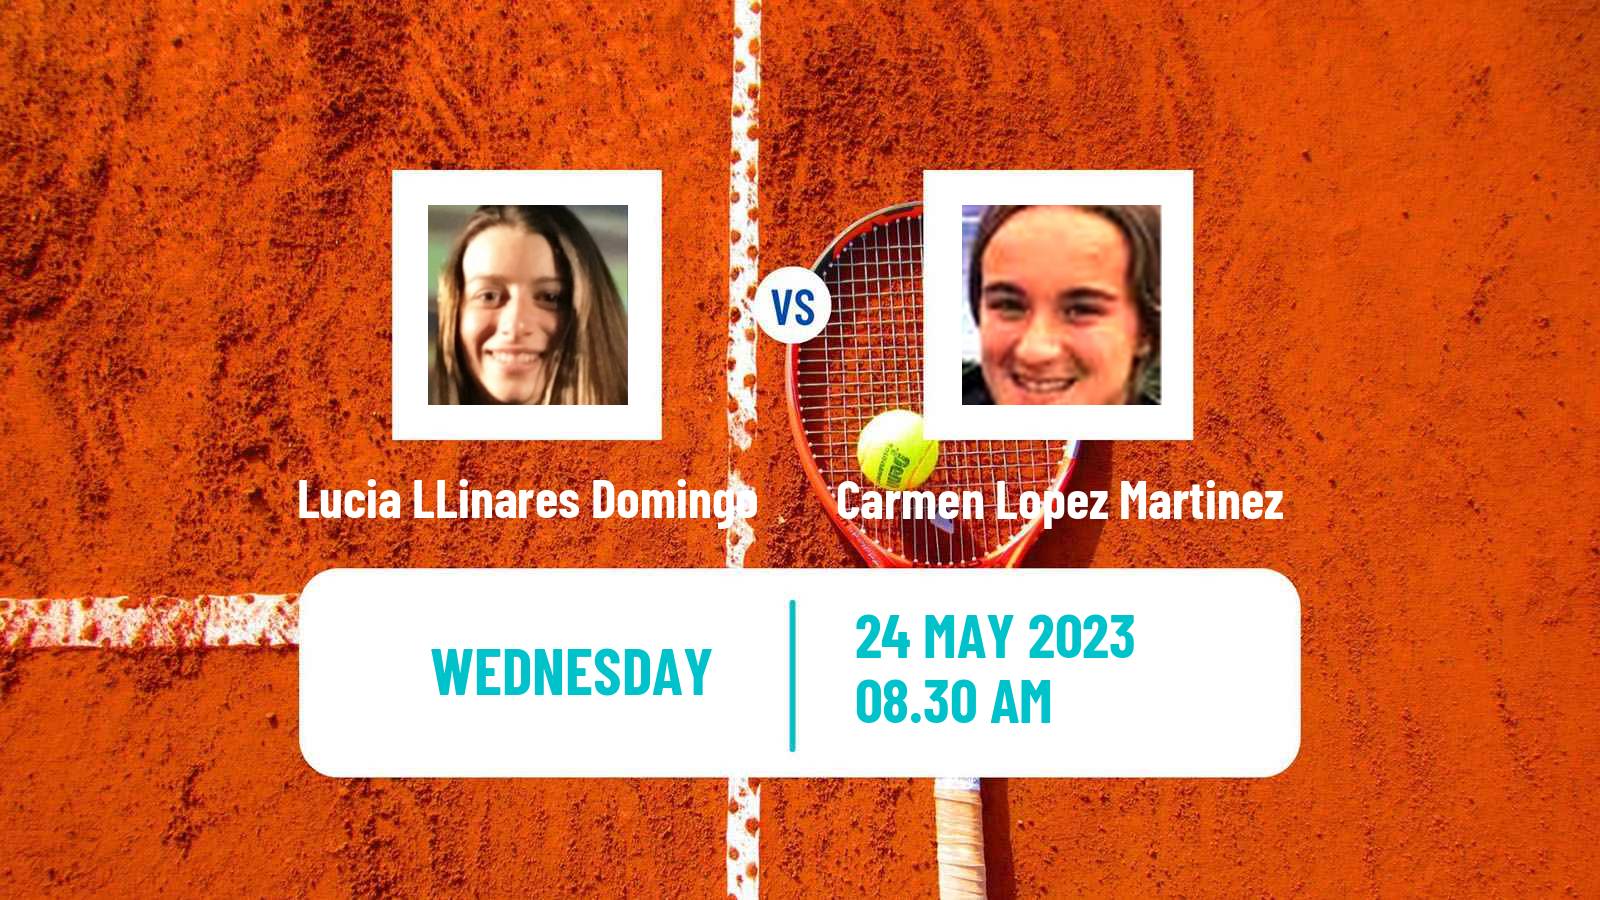 Tennis ITF W15 Malaga Women Lucia LLinares Domingo - Carmen Lopez Martinez